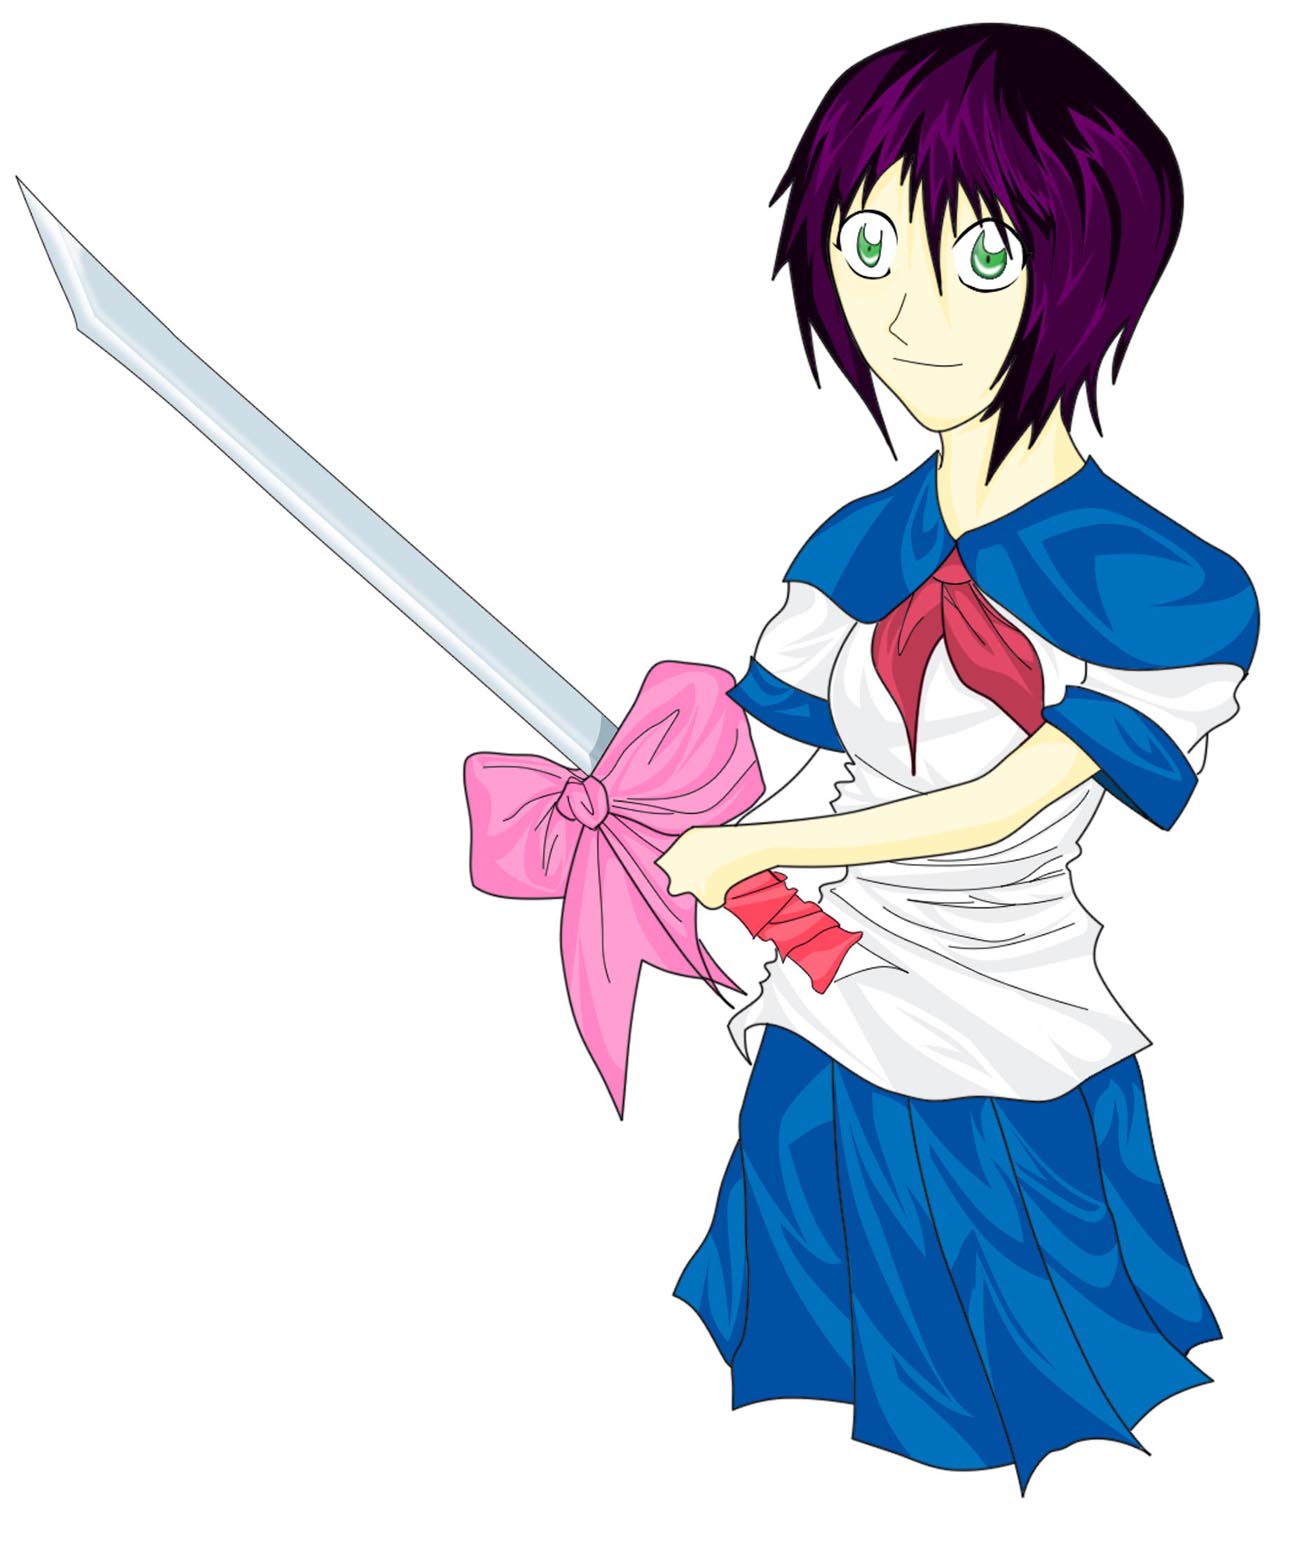  Anime Schoolgirl Fighter aka CG Version of Untitl by KenshinJennings